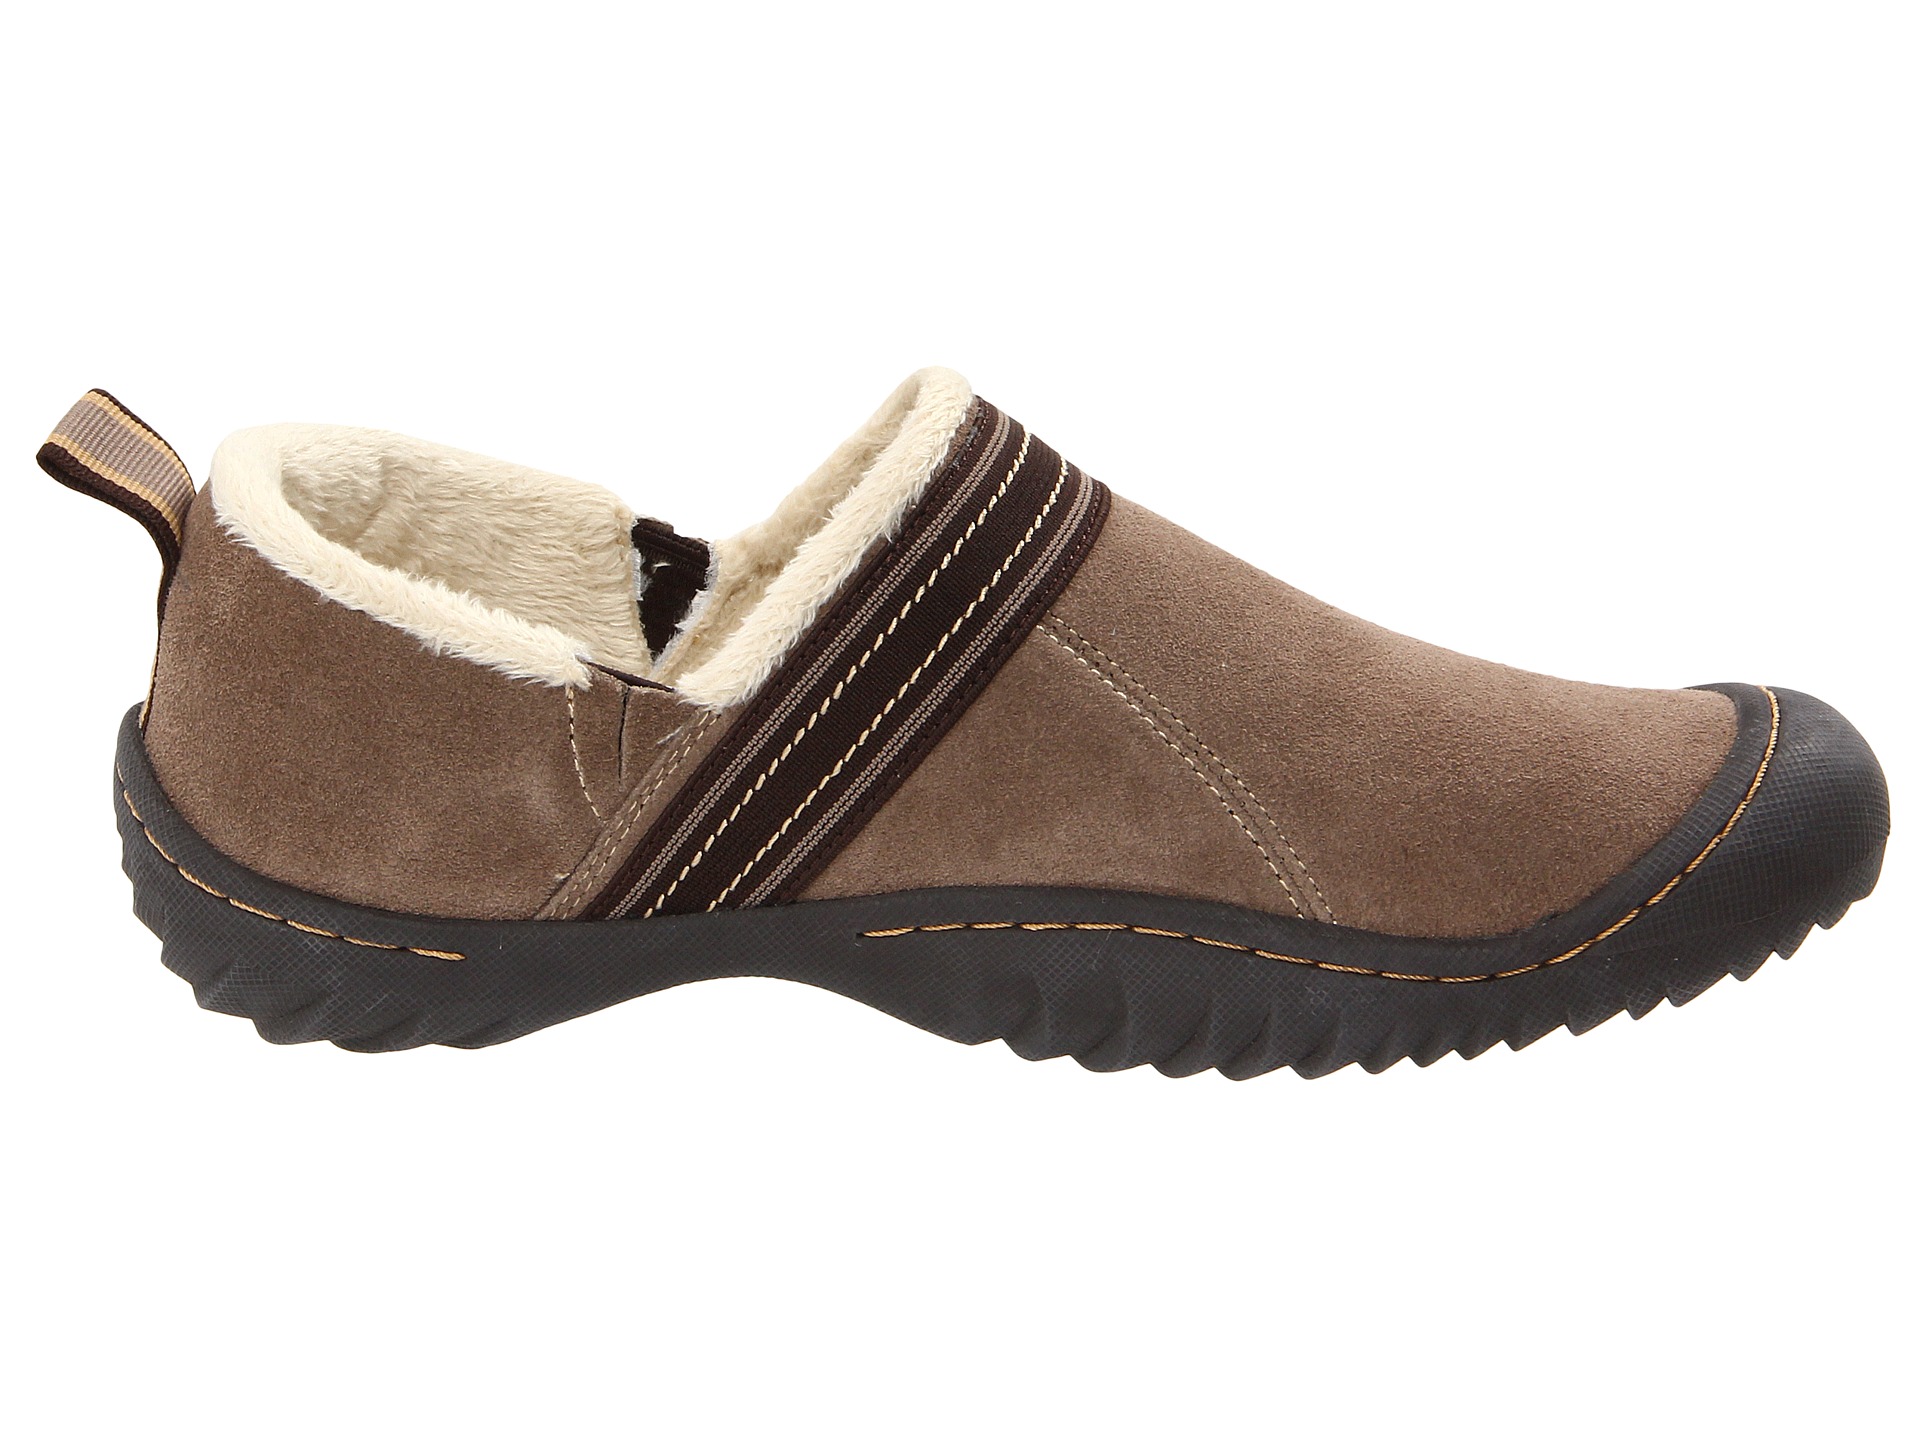 Jambu Styles, Shoes | Shipped Free at Zappos